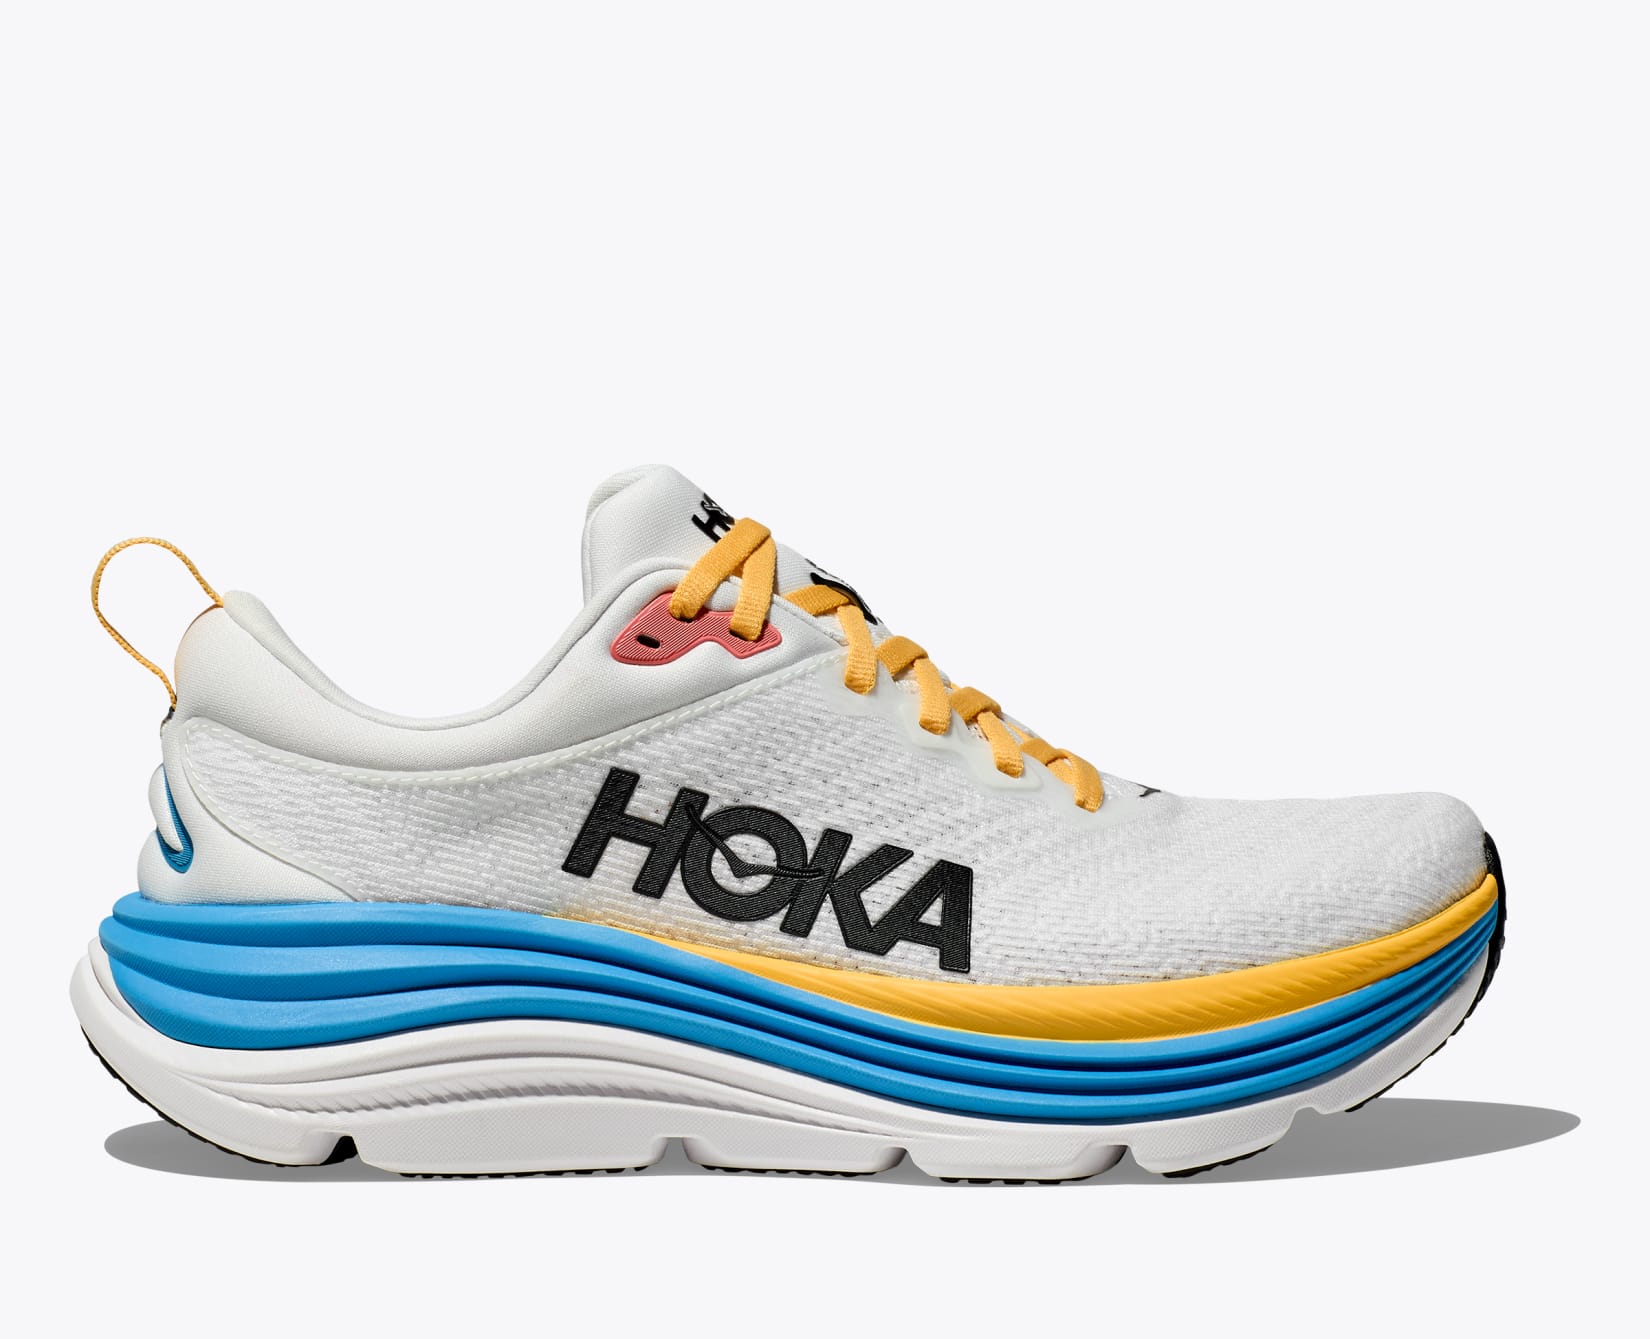 Hoka One One Mach 5 Women's Size 10.5 B (Medium) Running Shoes Teal